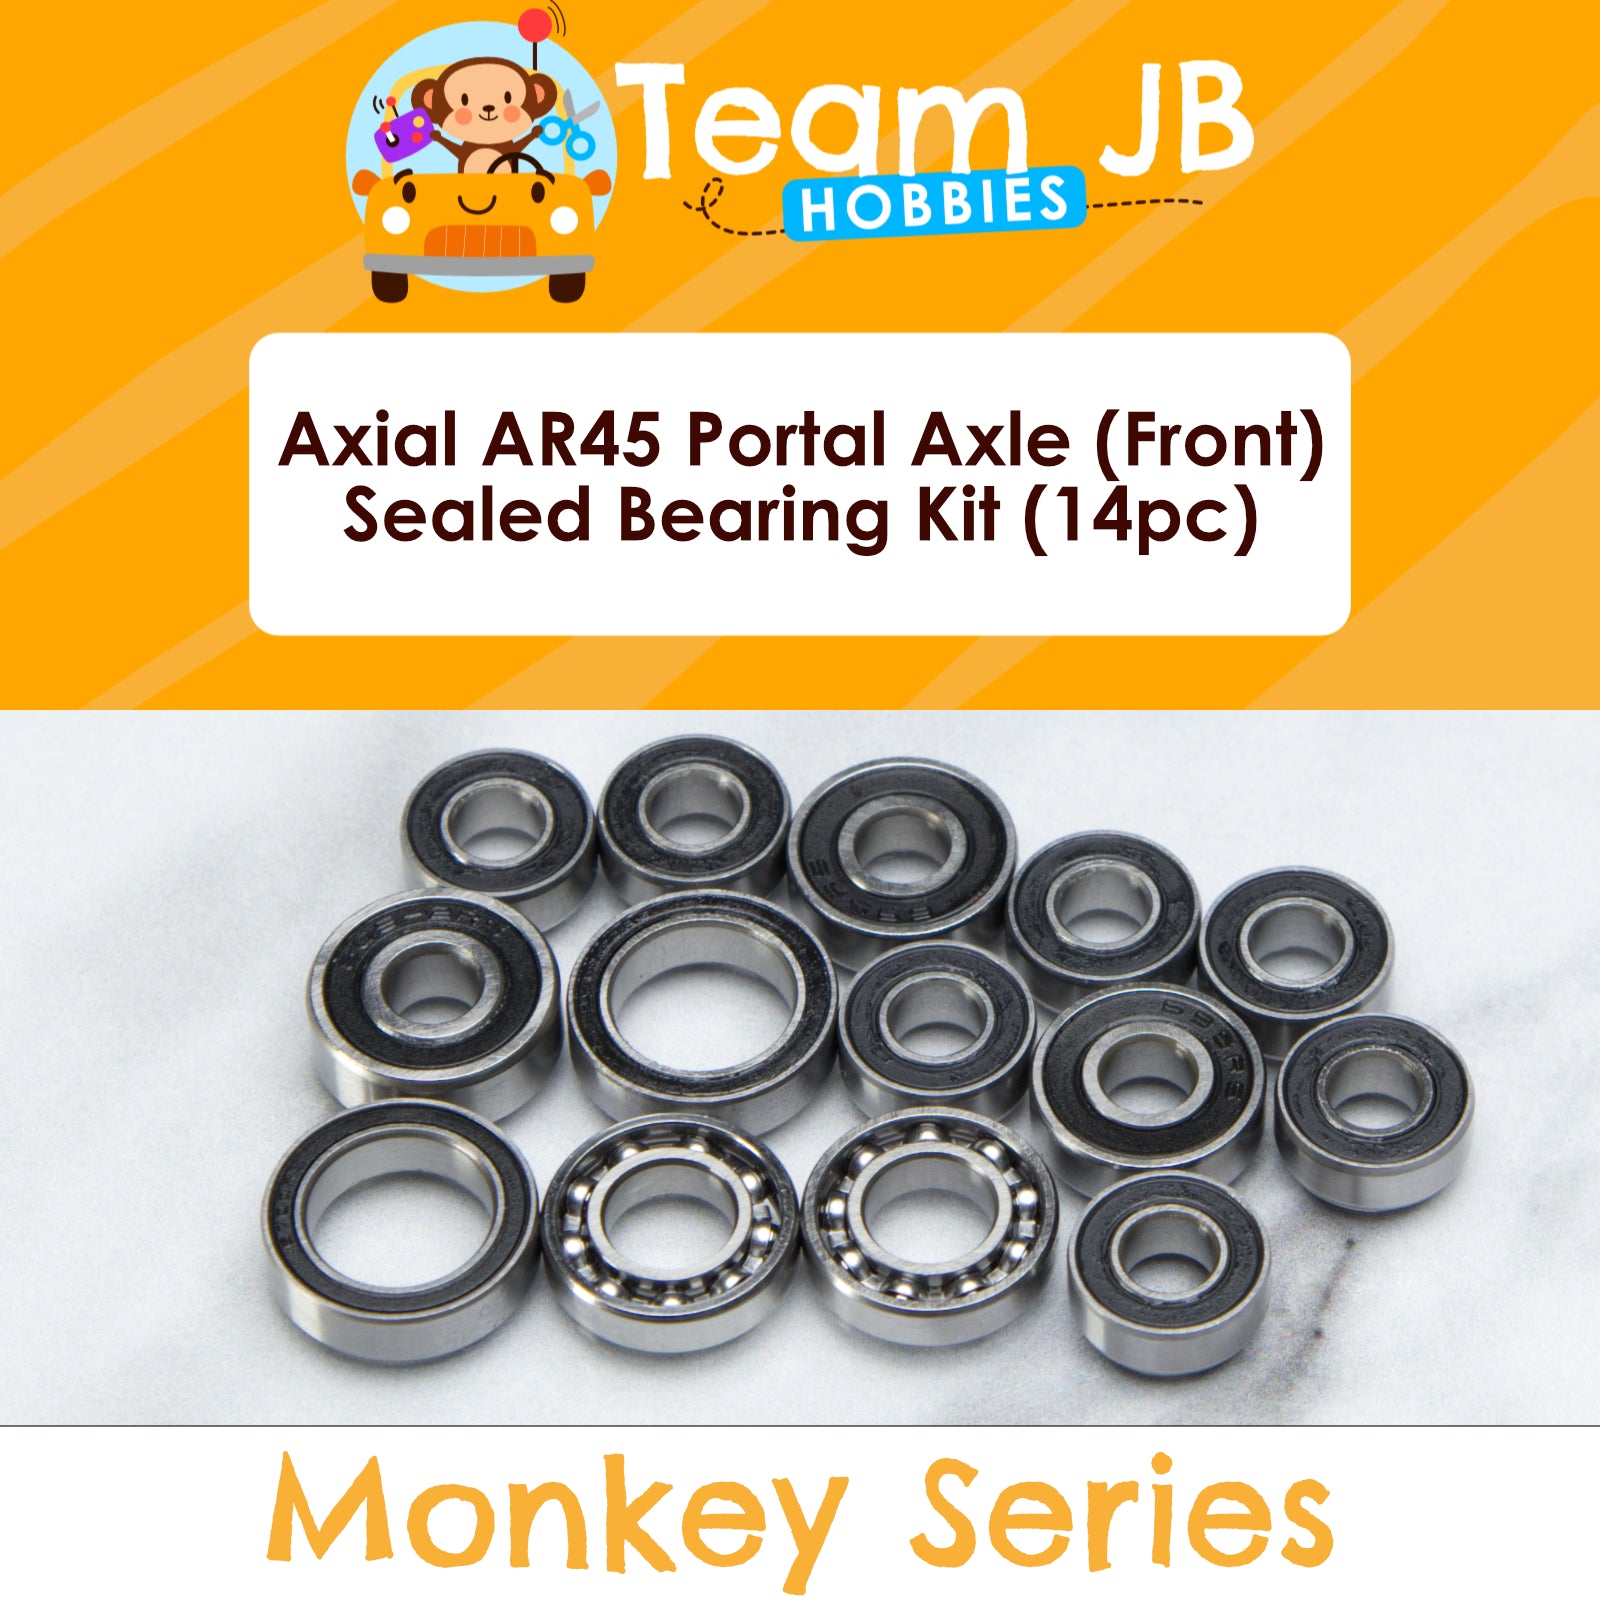 Axial AR45 Portal Axle (Front) - SCX10 III - Sealed Bearing Kit